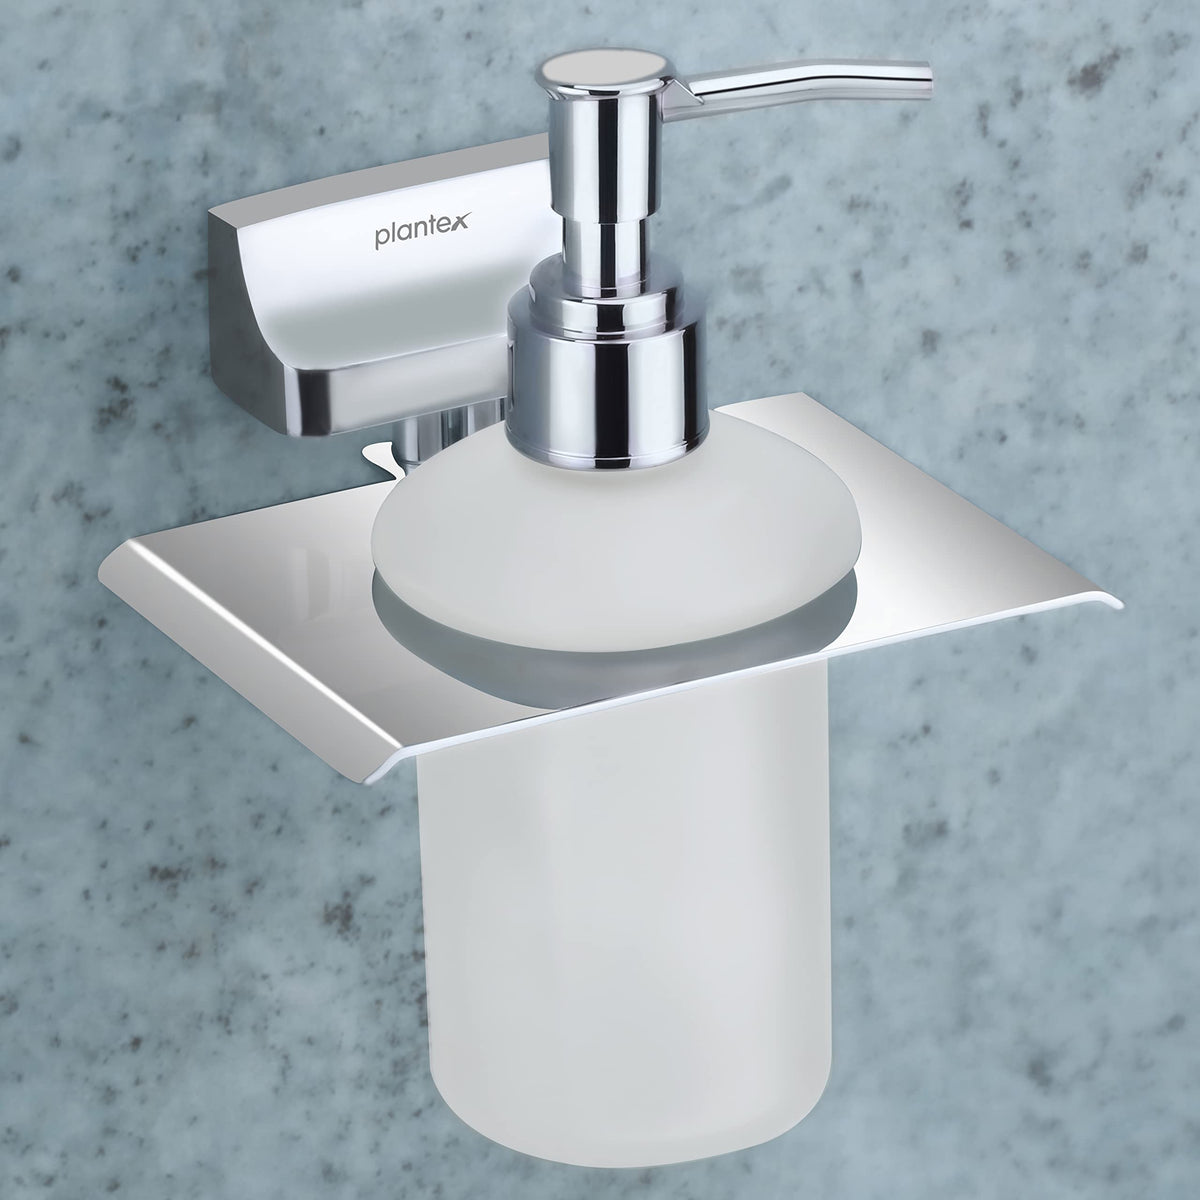 Plantex Rich matt-Silver wash Basin handwash Holder and Dispenser for Liquid soap (Fully Brass)